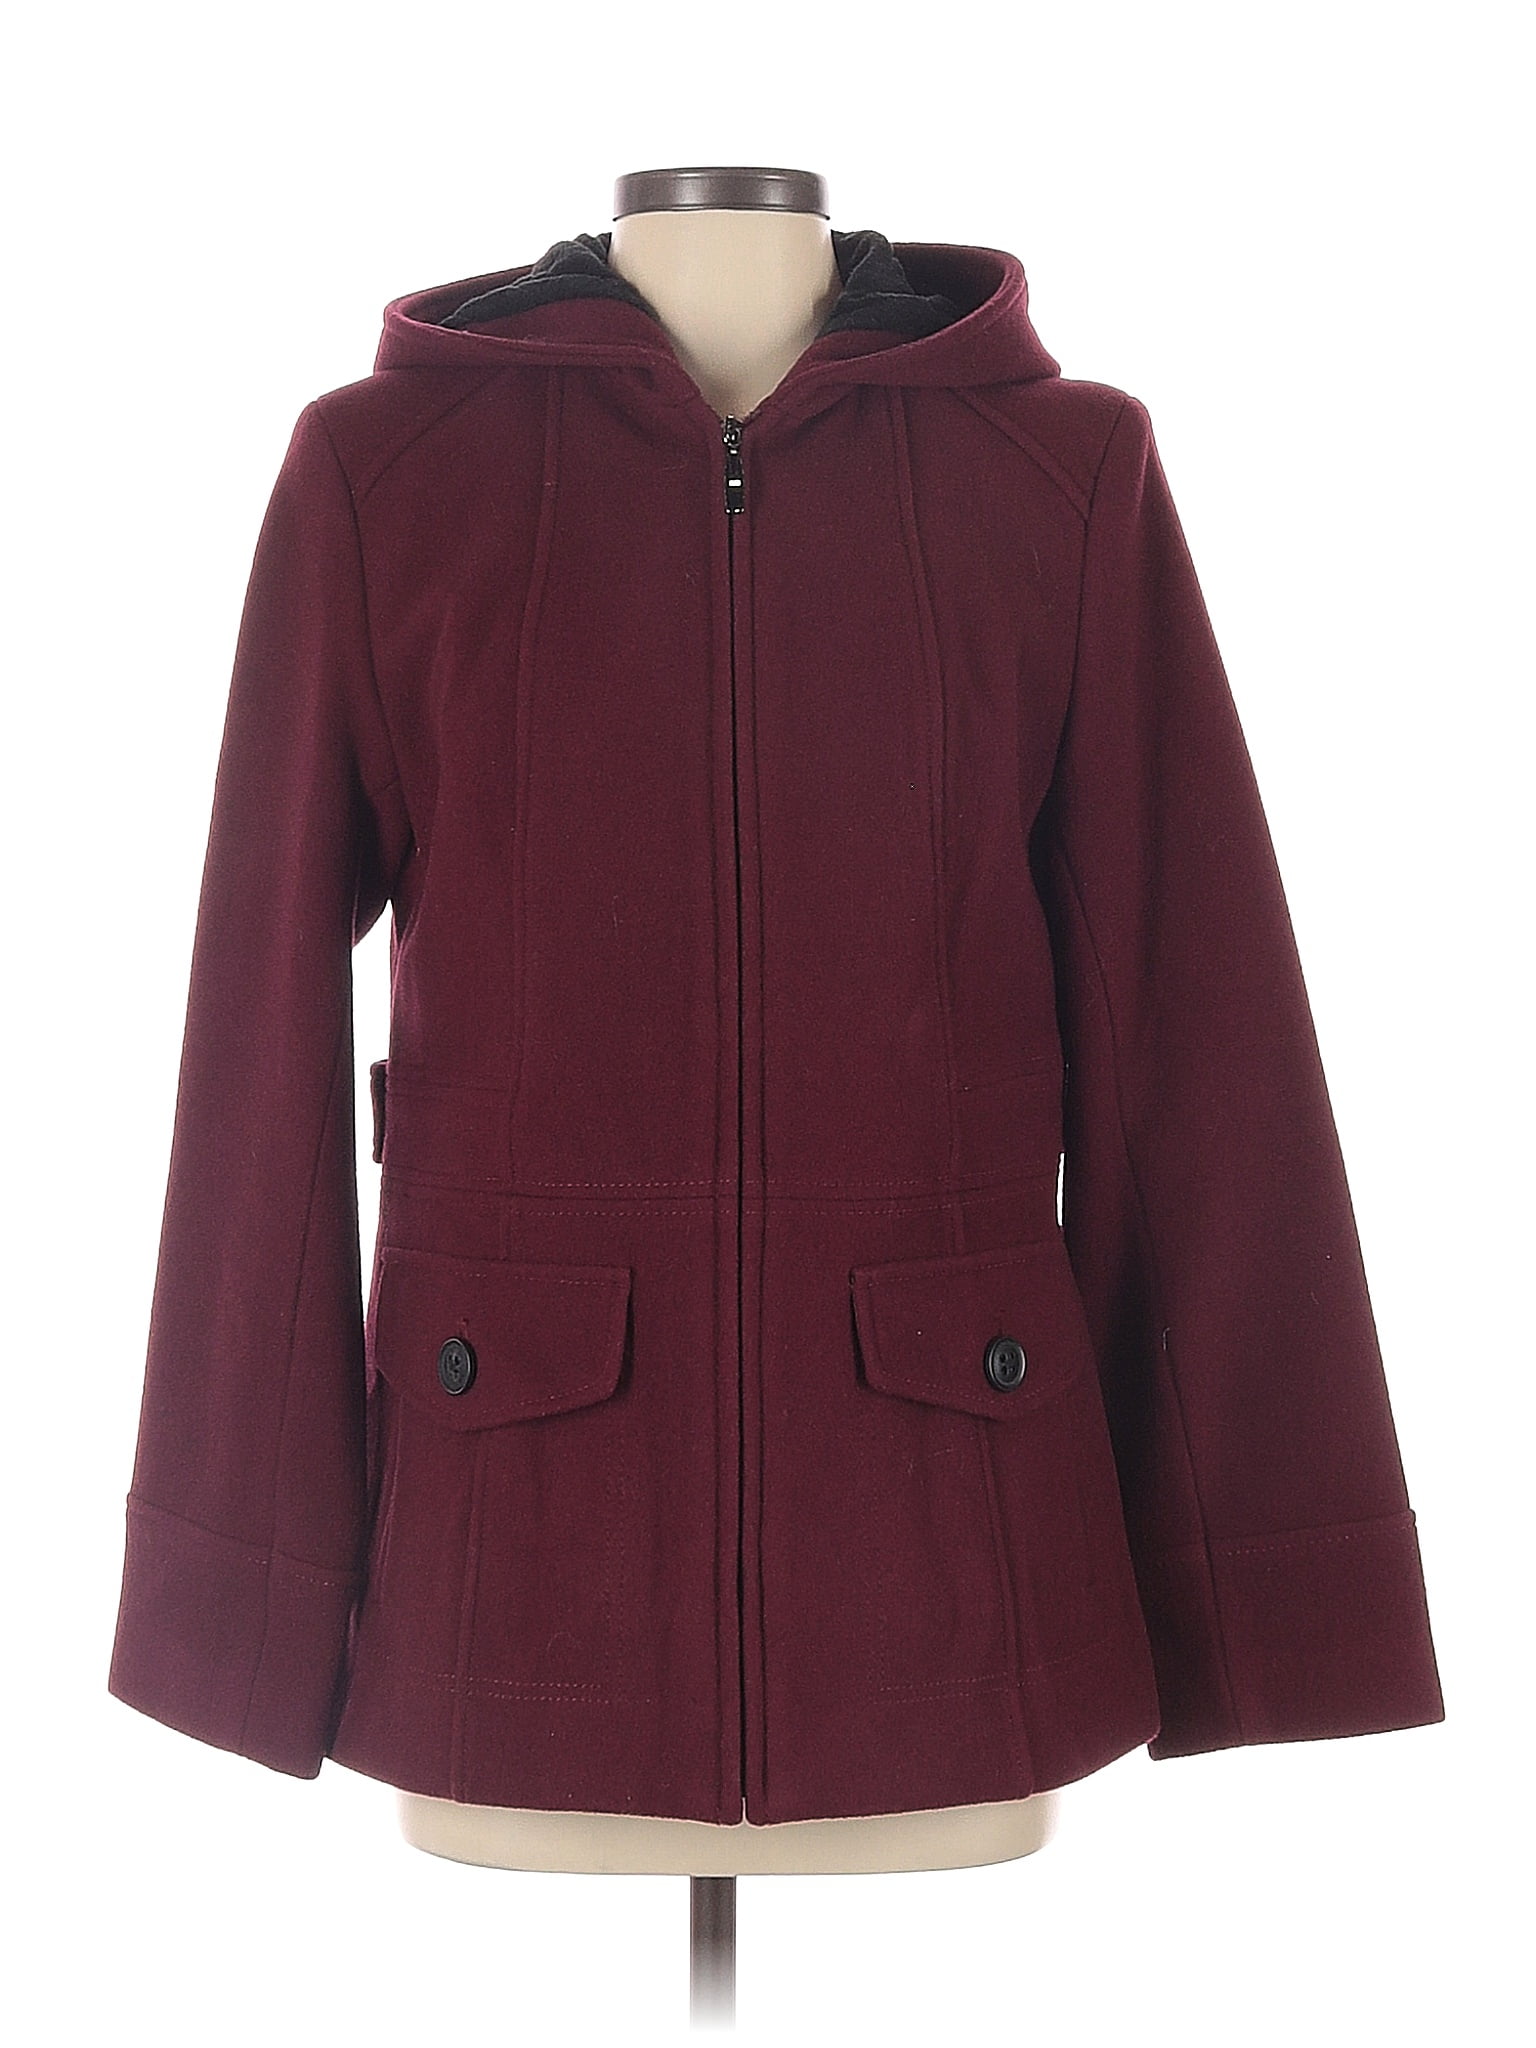 Croft & Barrow Solid Burgundy Wool Coat Size S - 50% off | thredUP